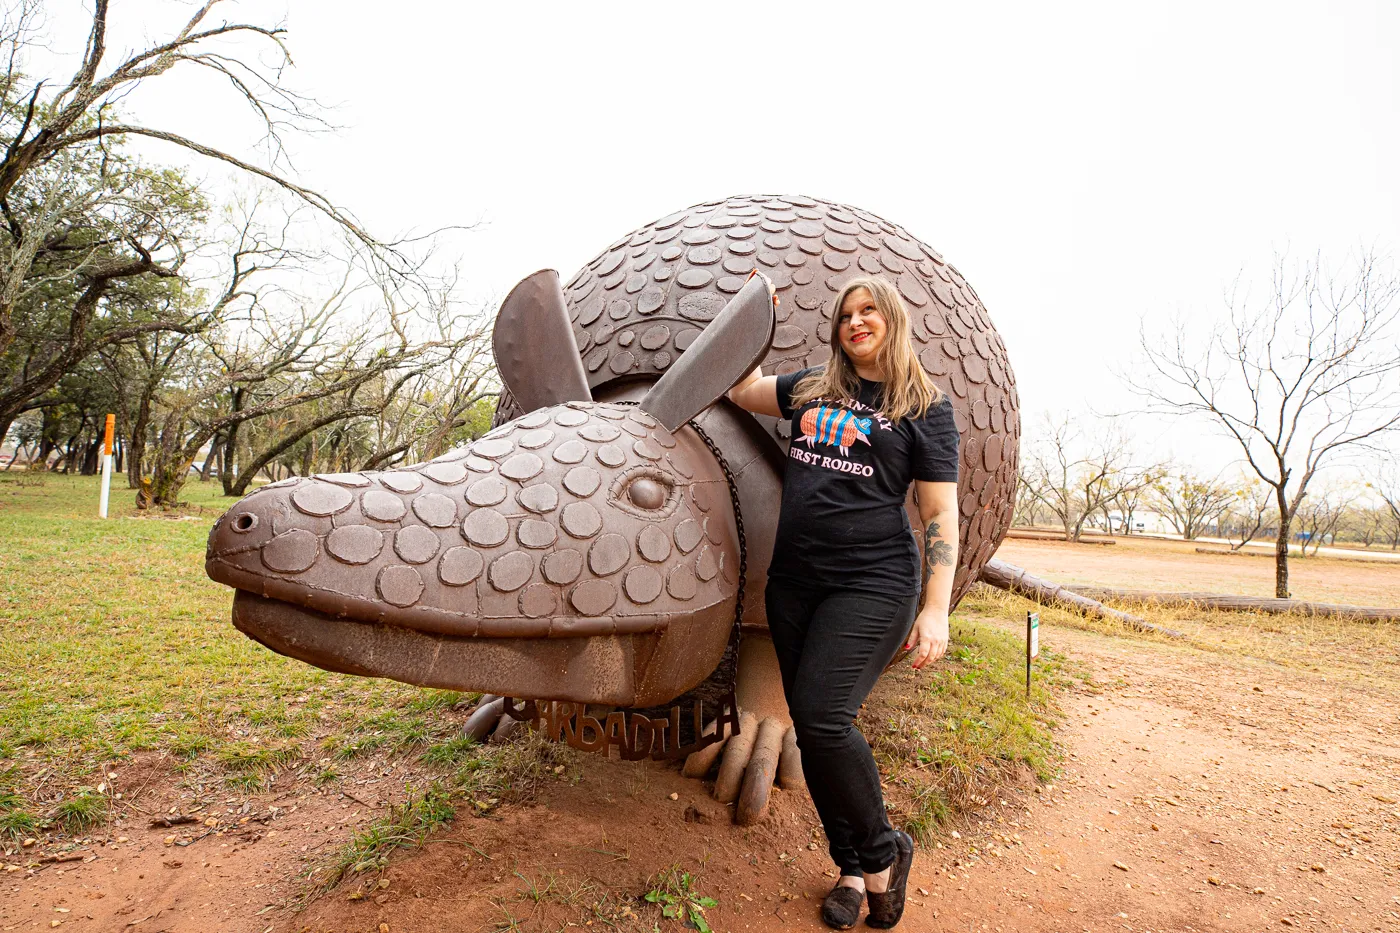 Barbadilla: the Giant Armadillo in Buffalo Gap, Texas